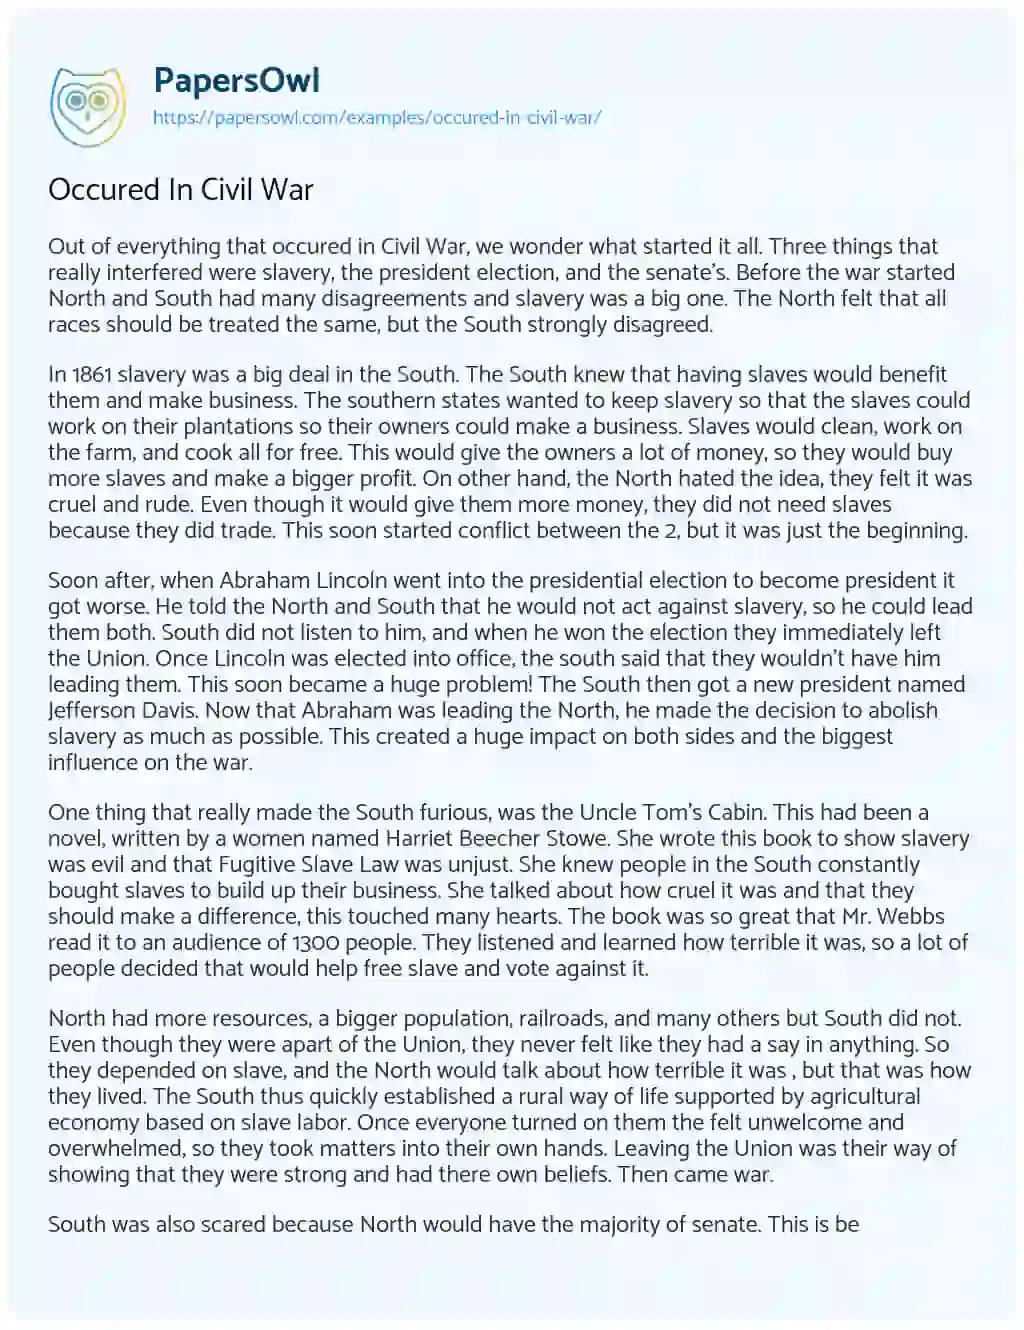 Essay on Occured in Civil War